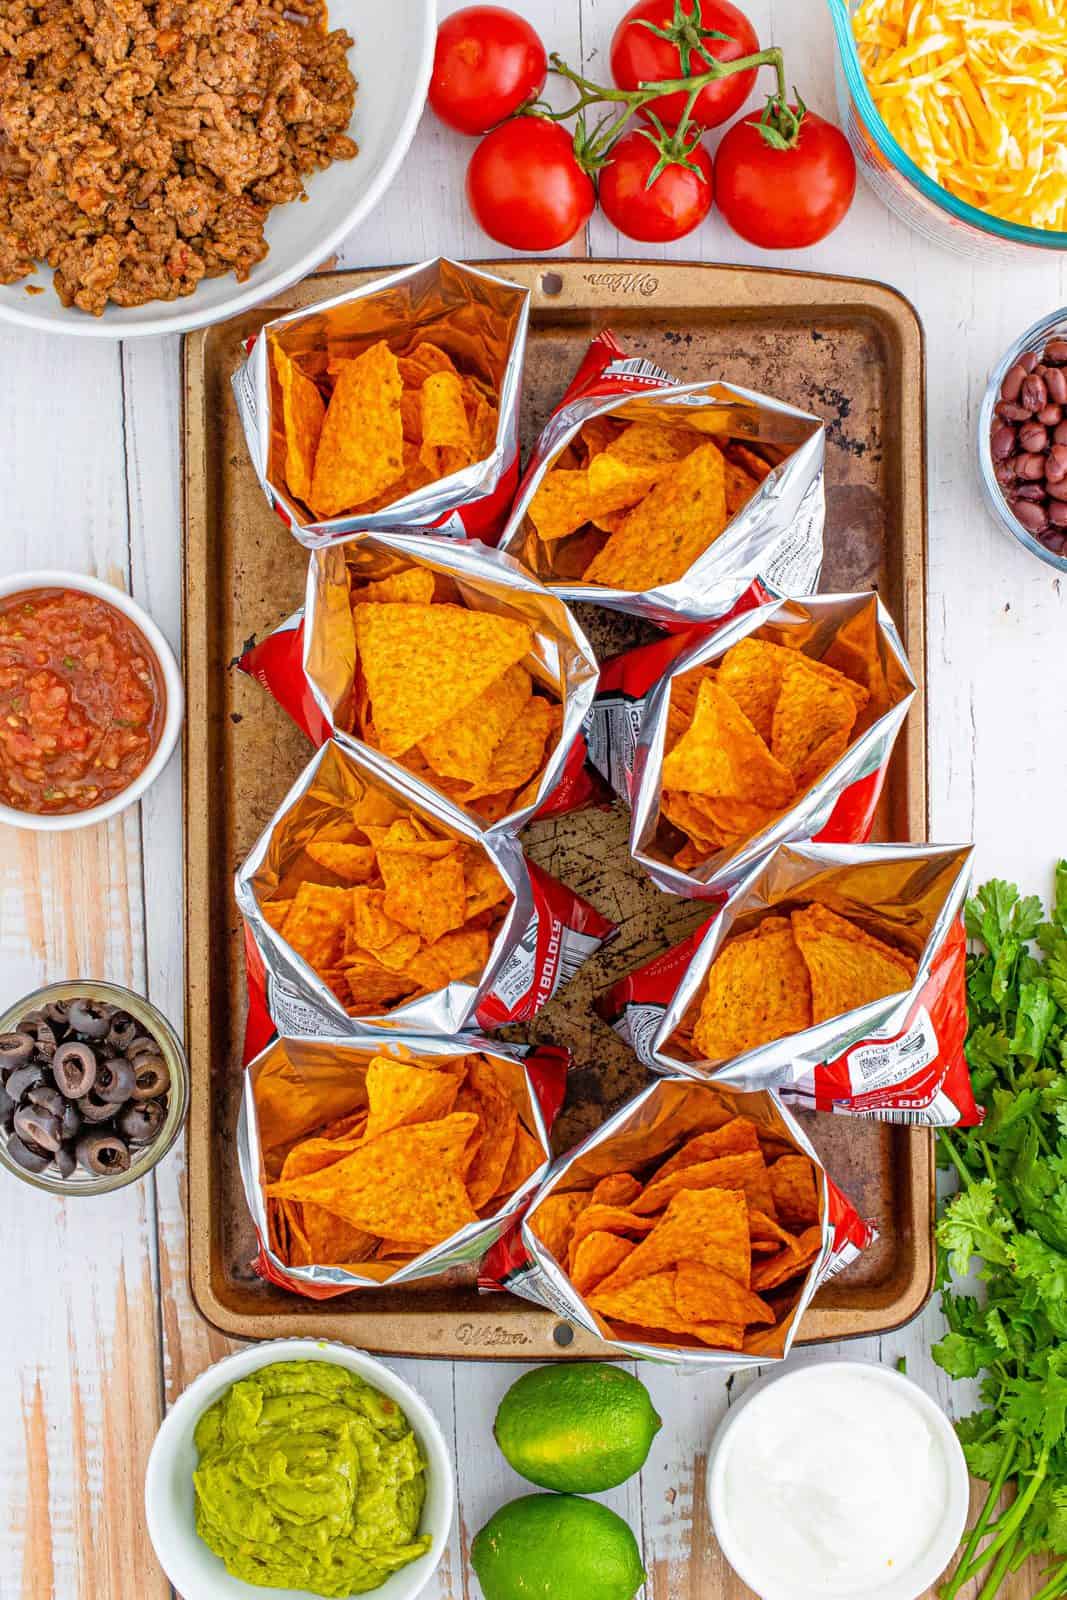 Open bags of Doritos on sheet pan.